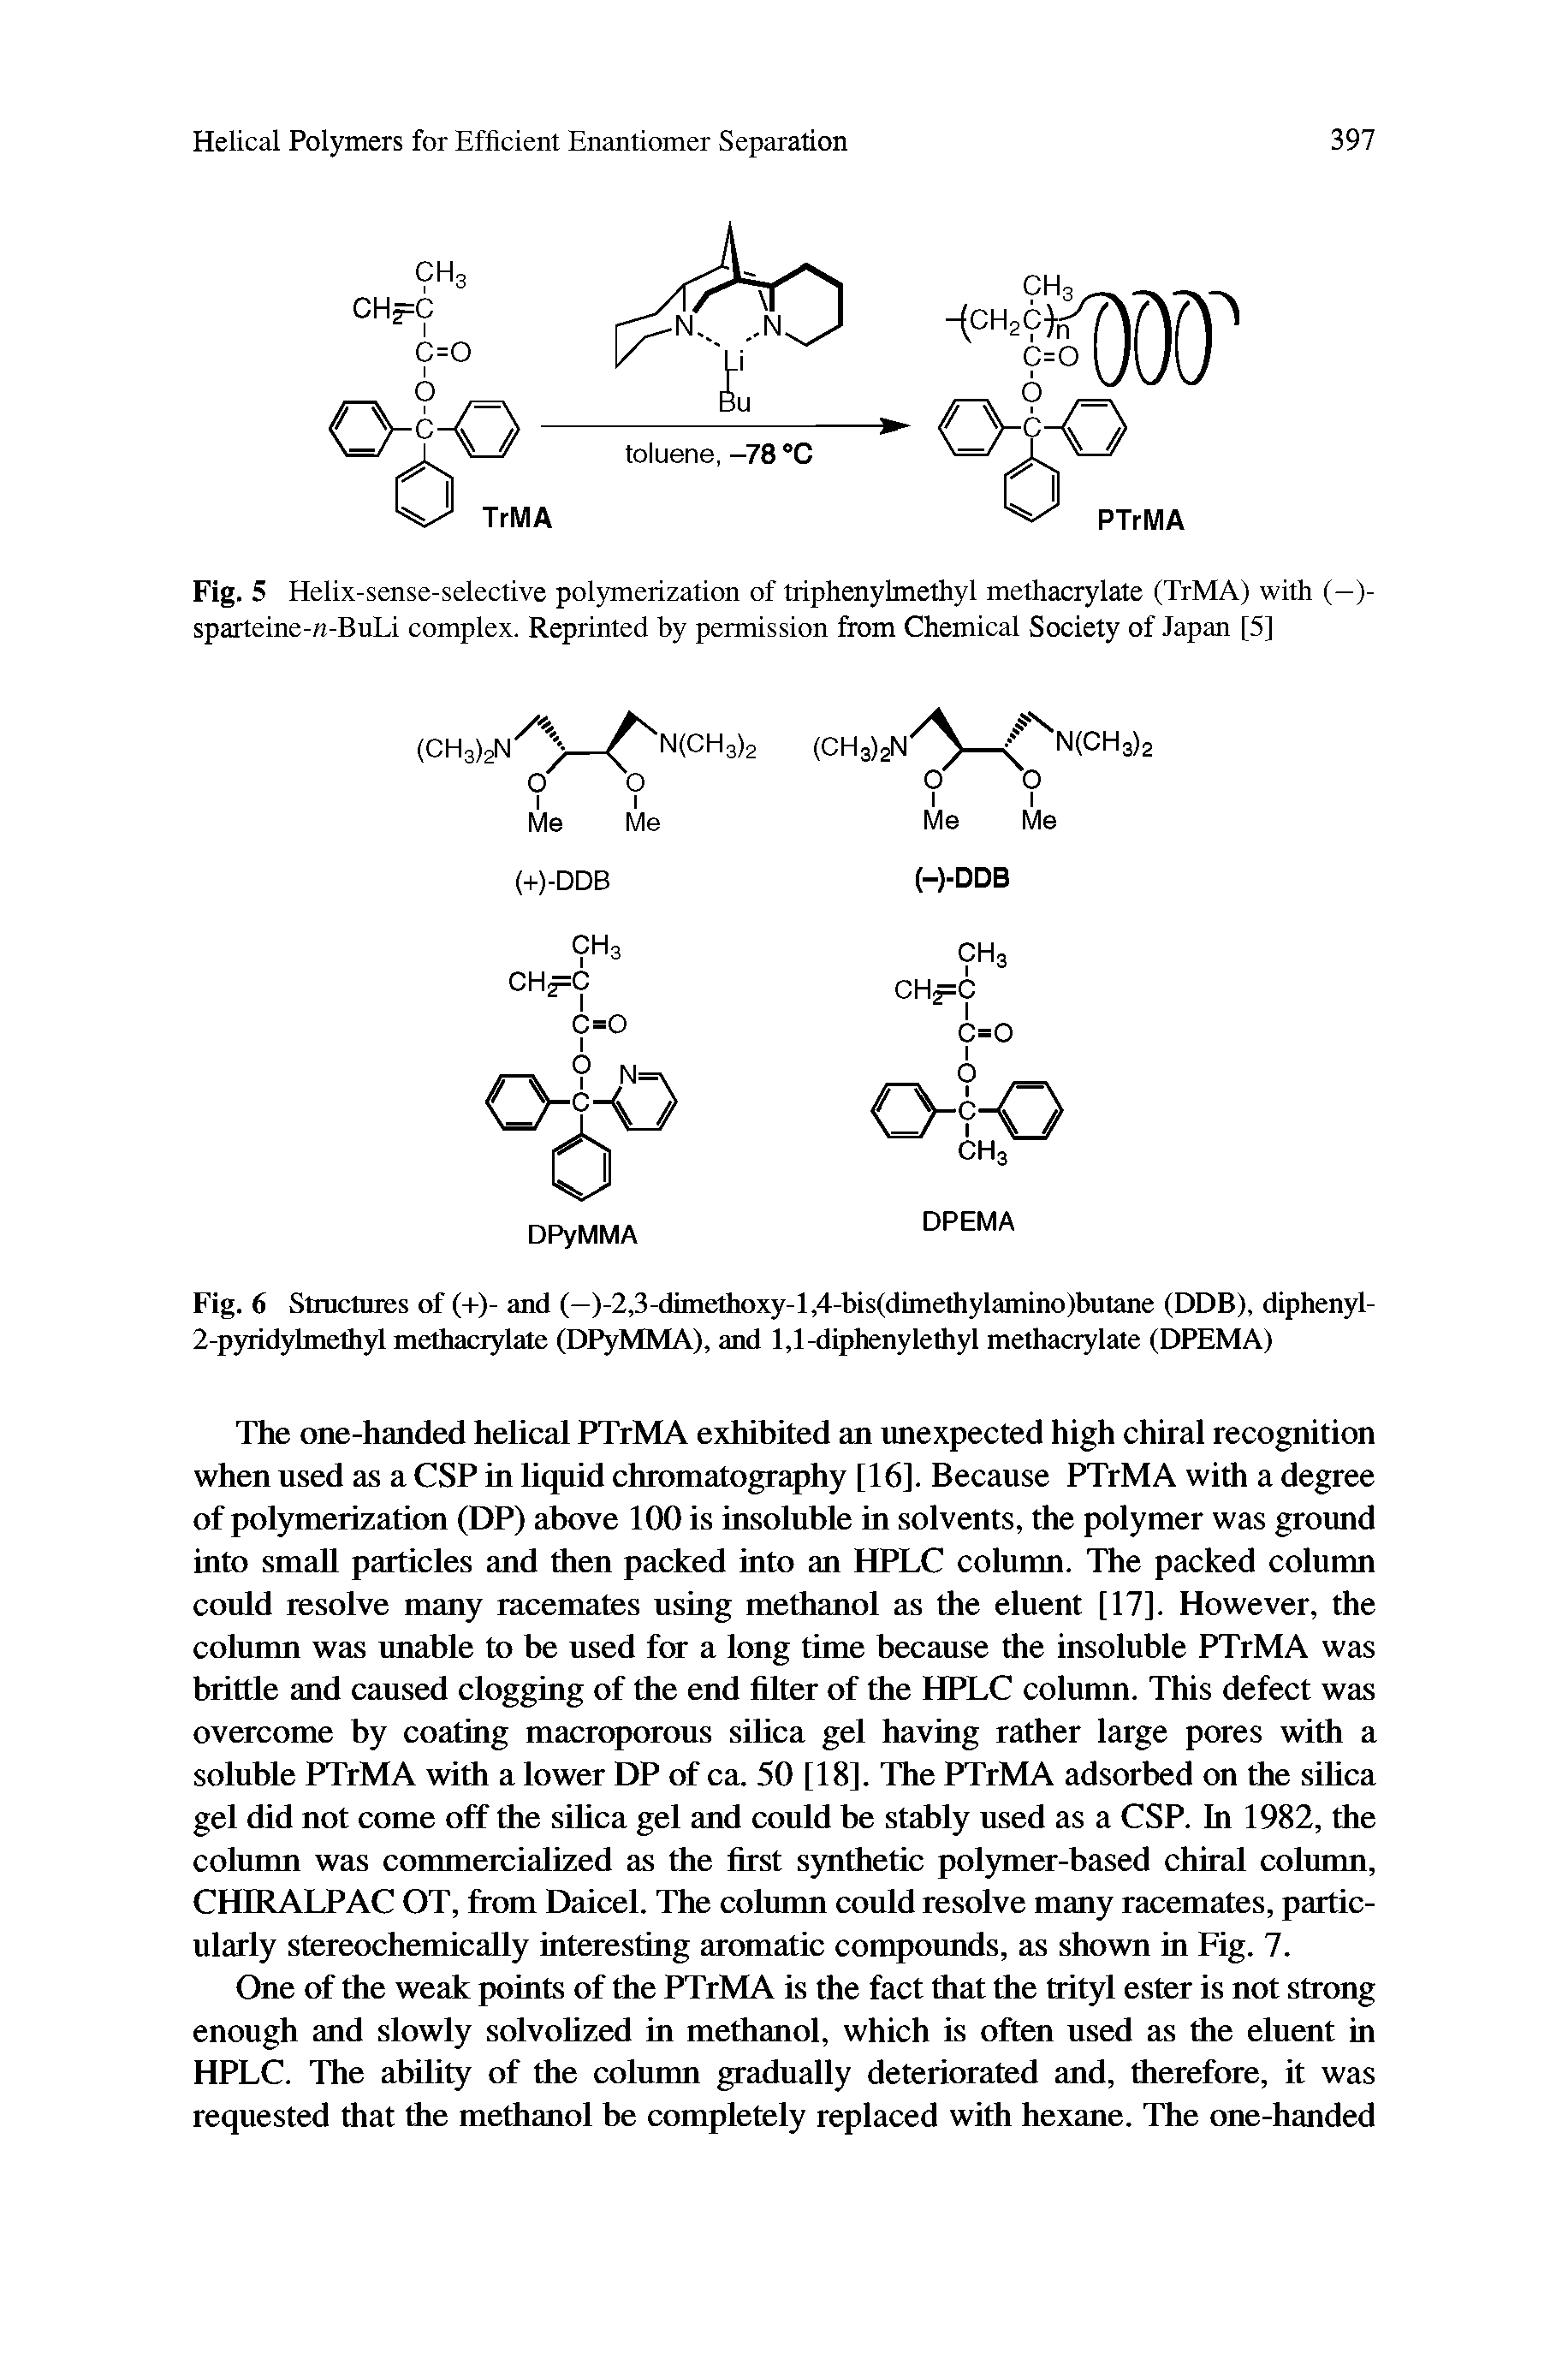 Fig. 6 Structures of (-t-)- and (—)-2,3-dimethoxy-l,4-bis(dimethylamino)butane (DDB), diphenyl-2-pyridyhnethyl methacrylate (DPyMMA), and 1,1-diphenylethyl methacrylate (DPEMA)...